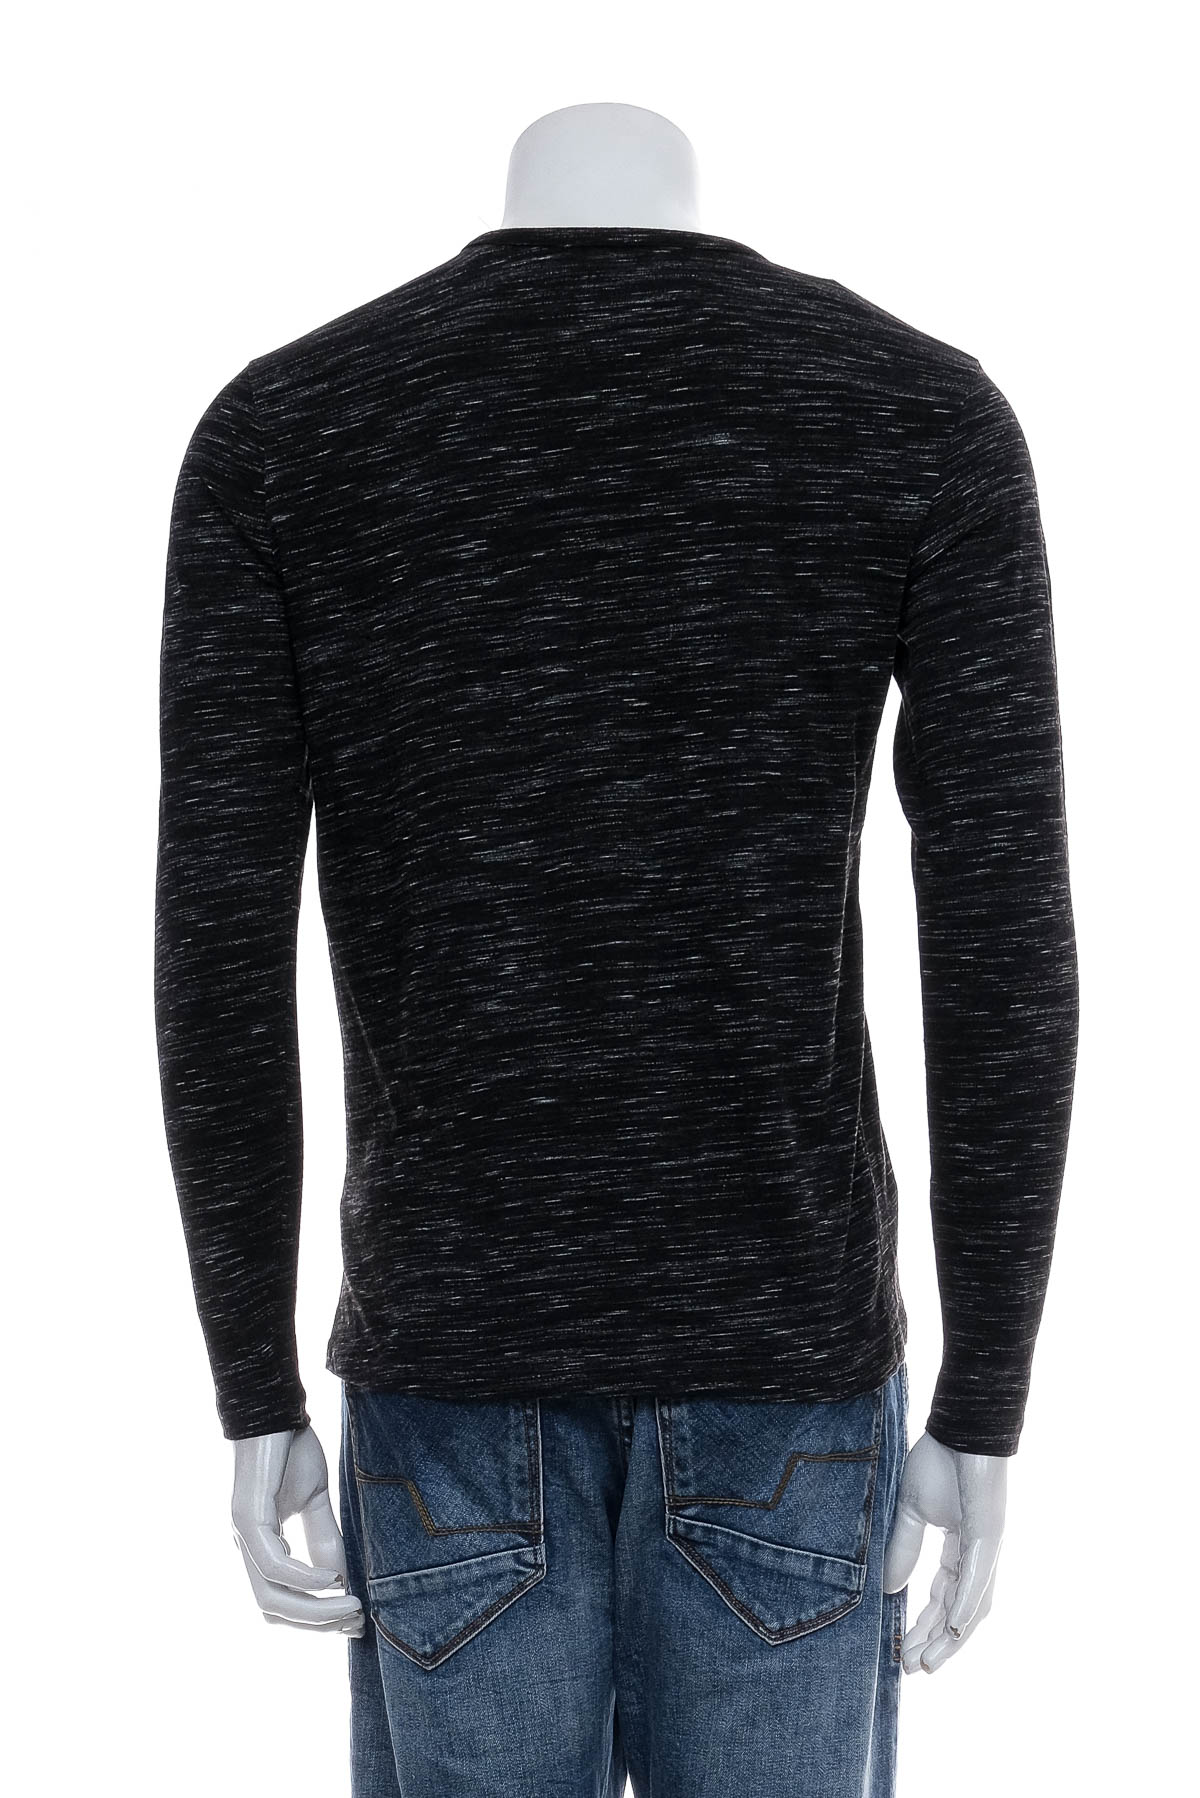 Men's sweater - X-Mail - 1